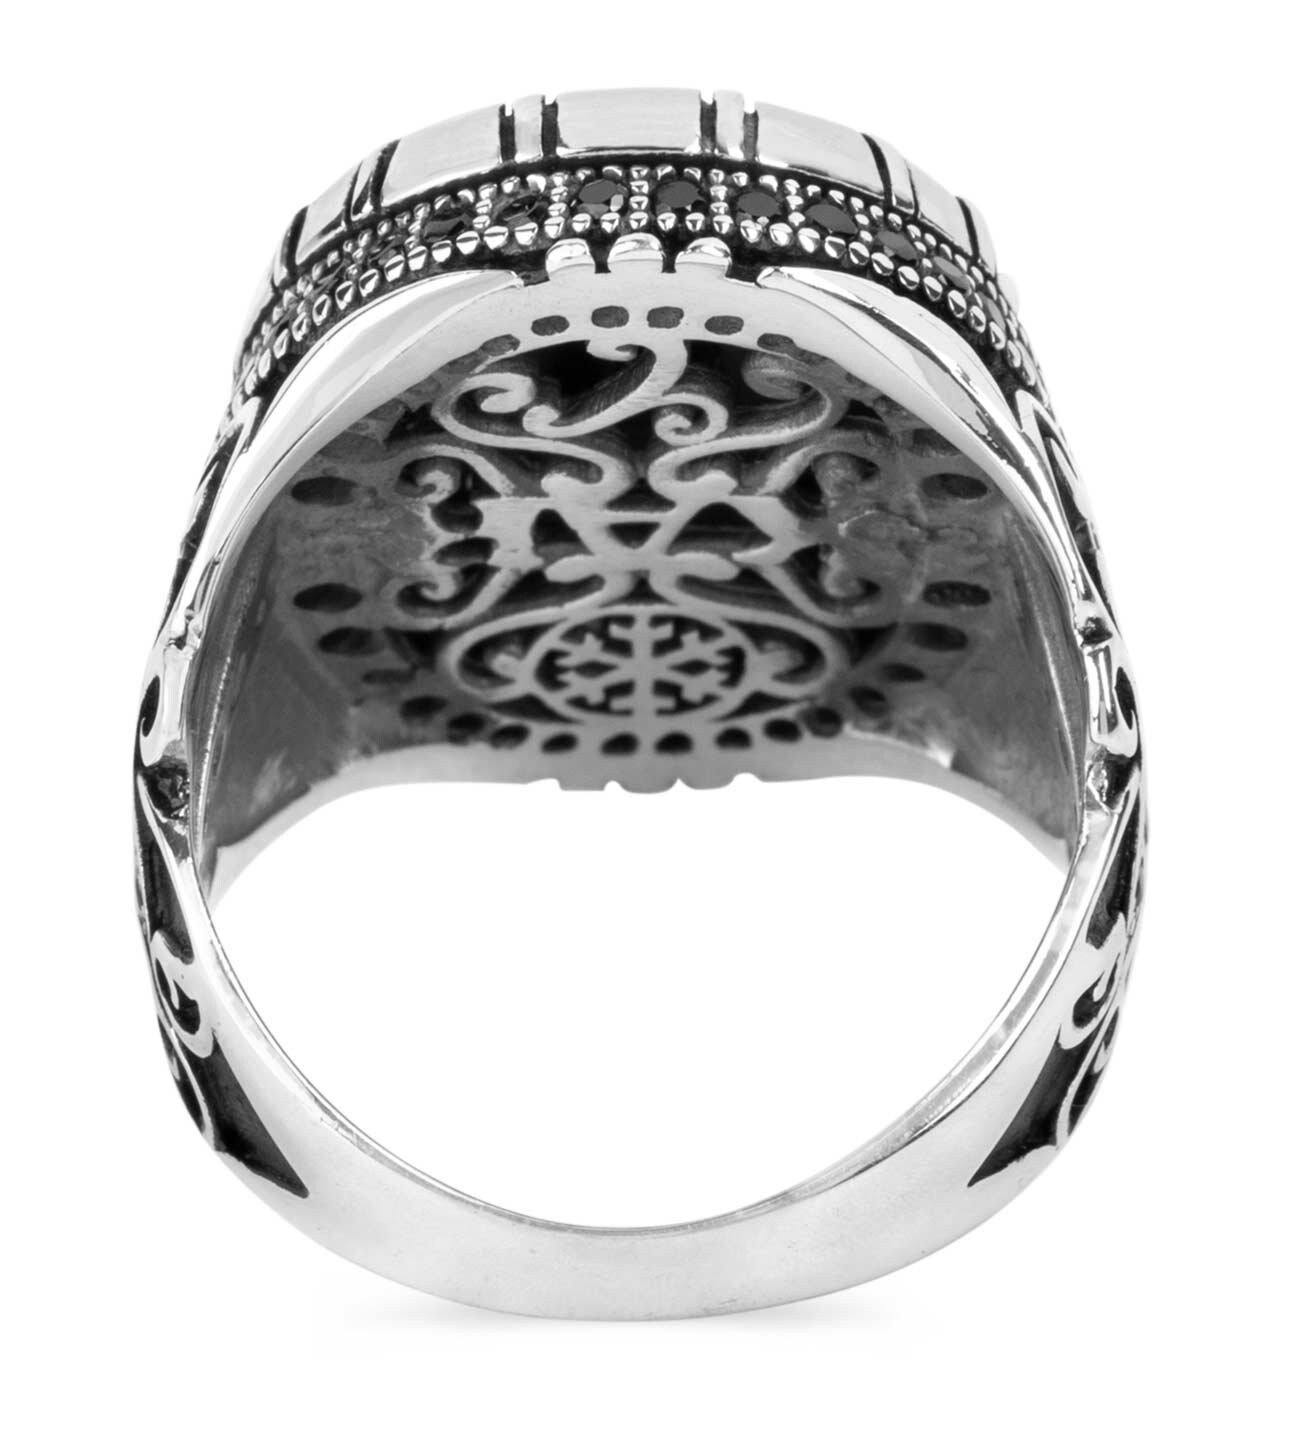 Special Design 925 Handmade Sterling Silver Men Ring - OXO SILVER